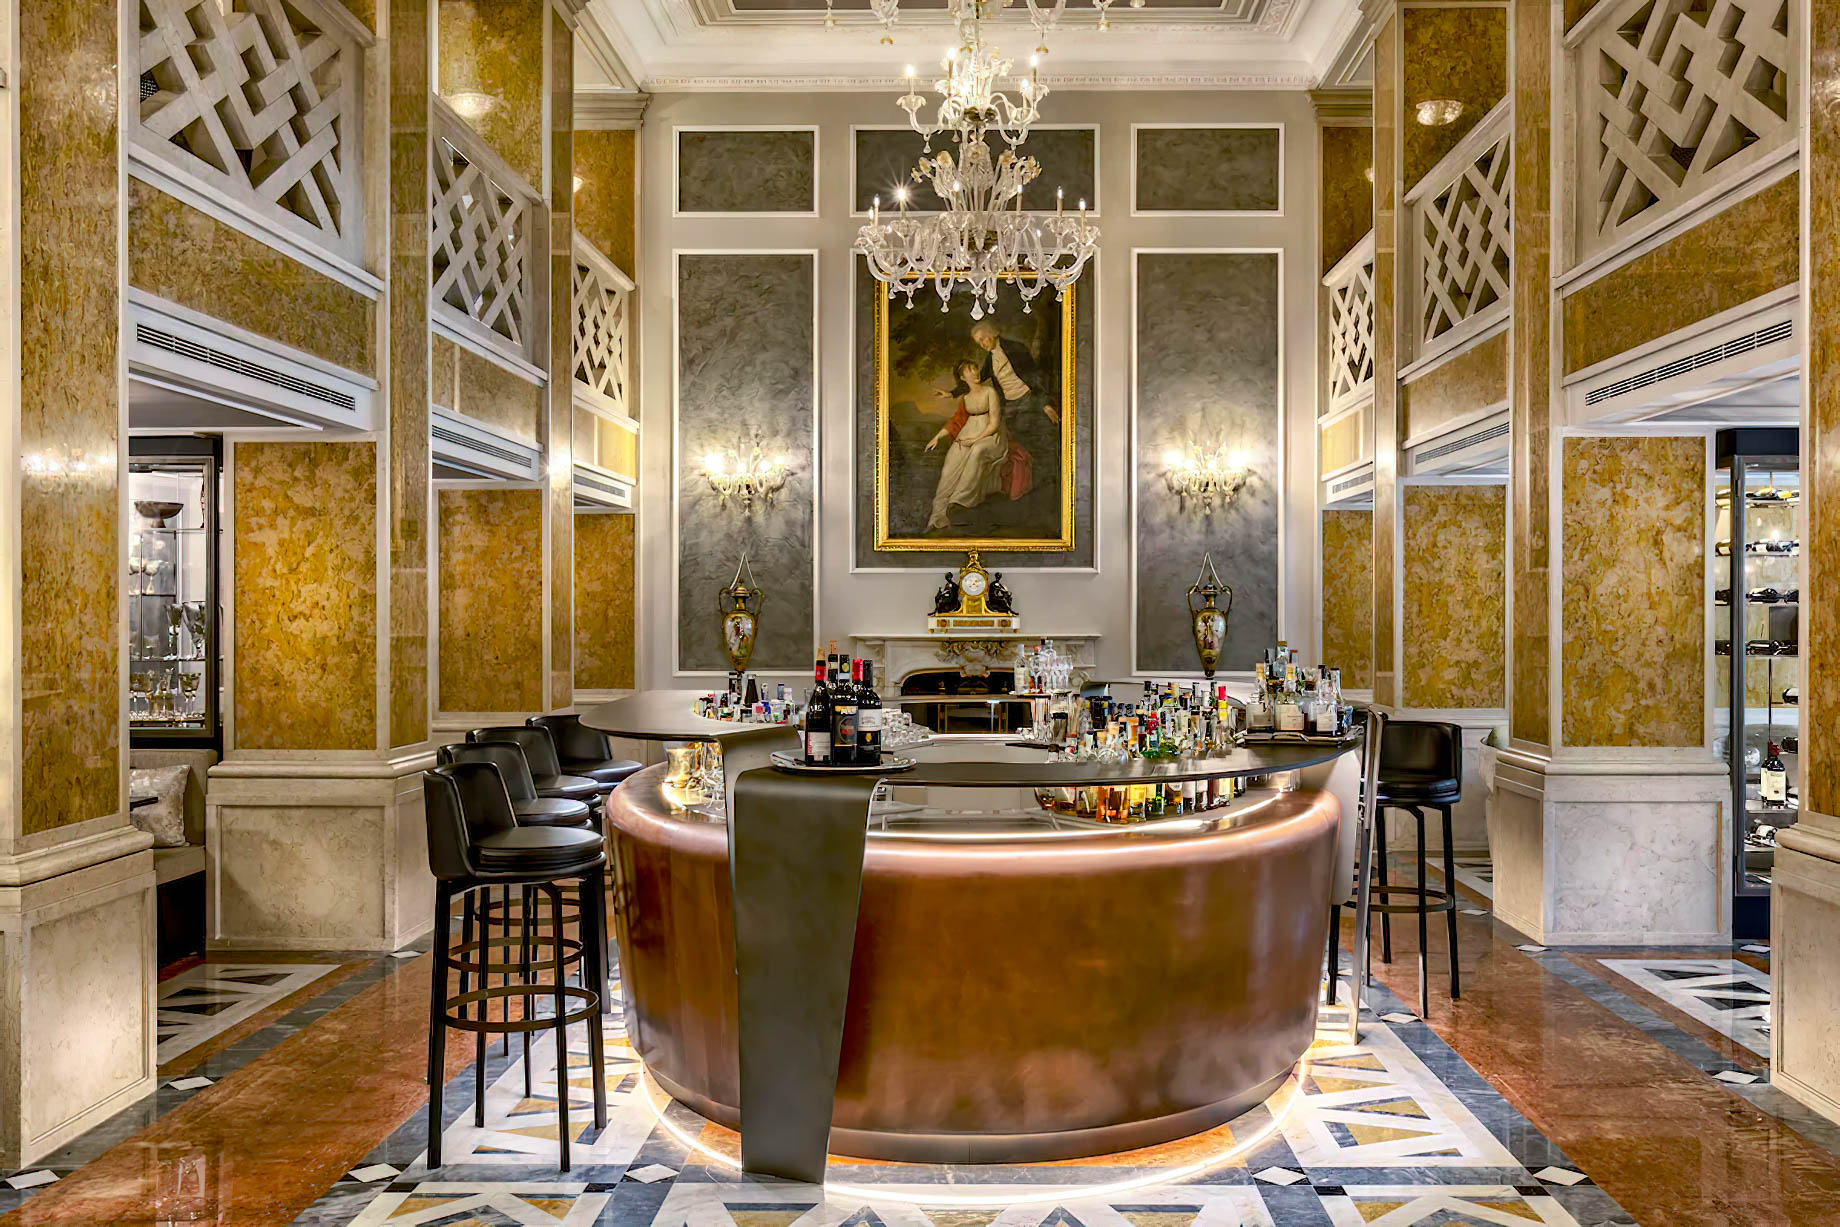 Baglioni Hotel Luna, Venezia – Venice, Italy – Canova Bar